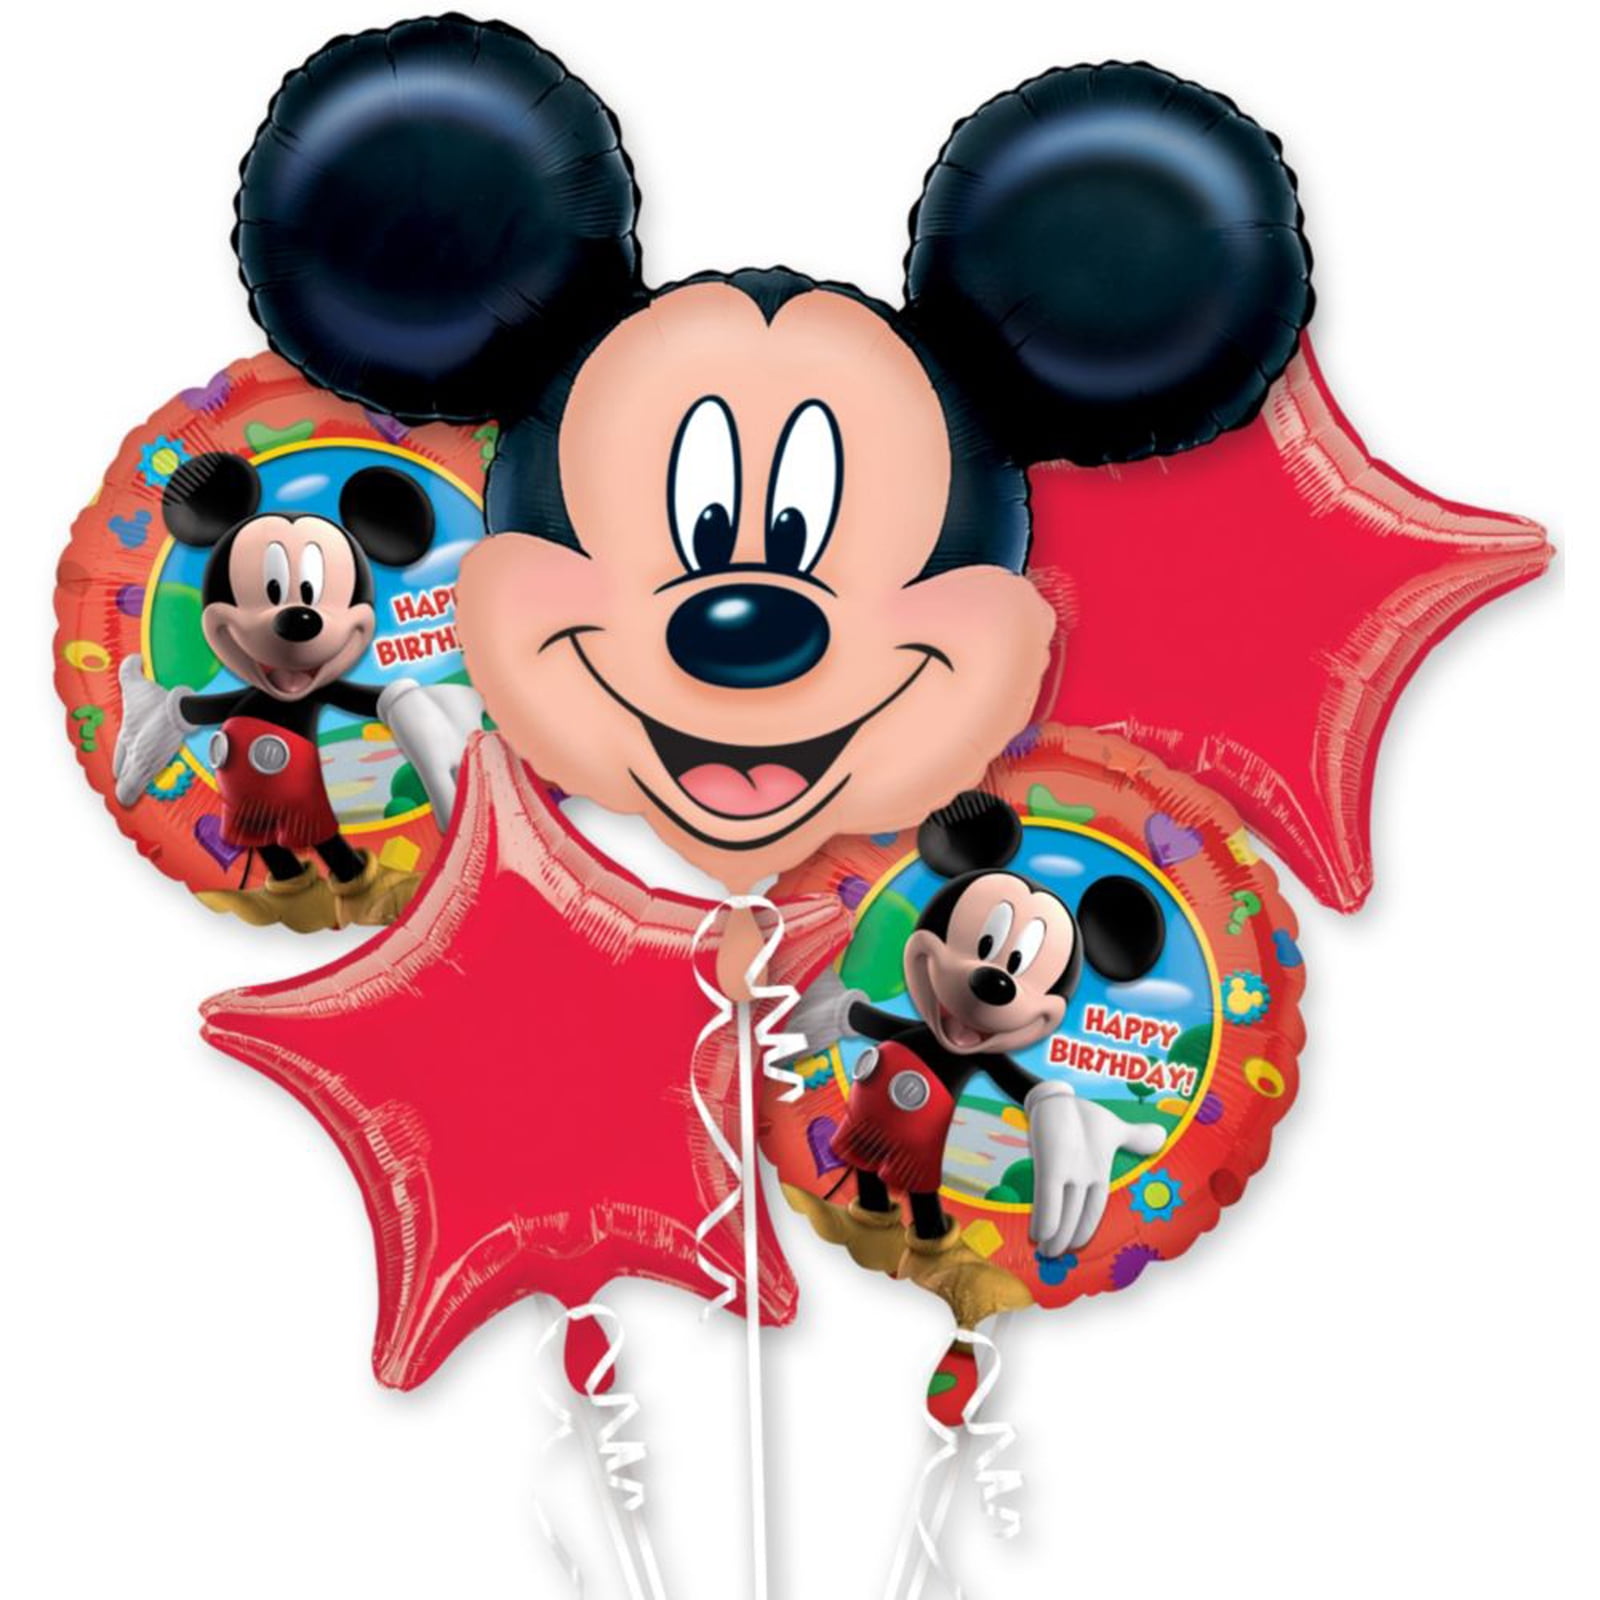 Party Ballons bunt6 StückMickey MouseDisney Micky MausLuftballons